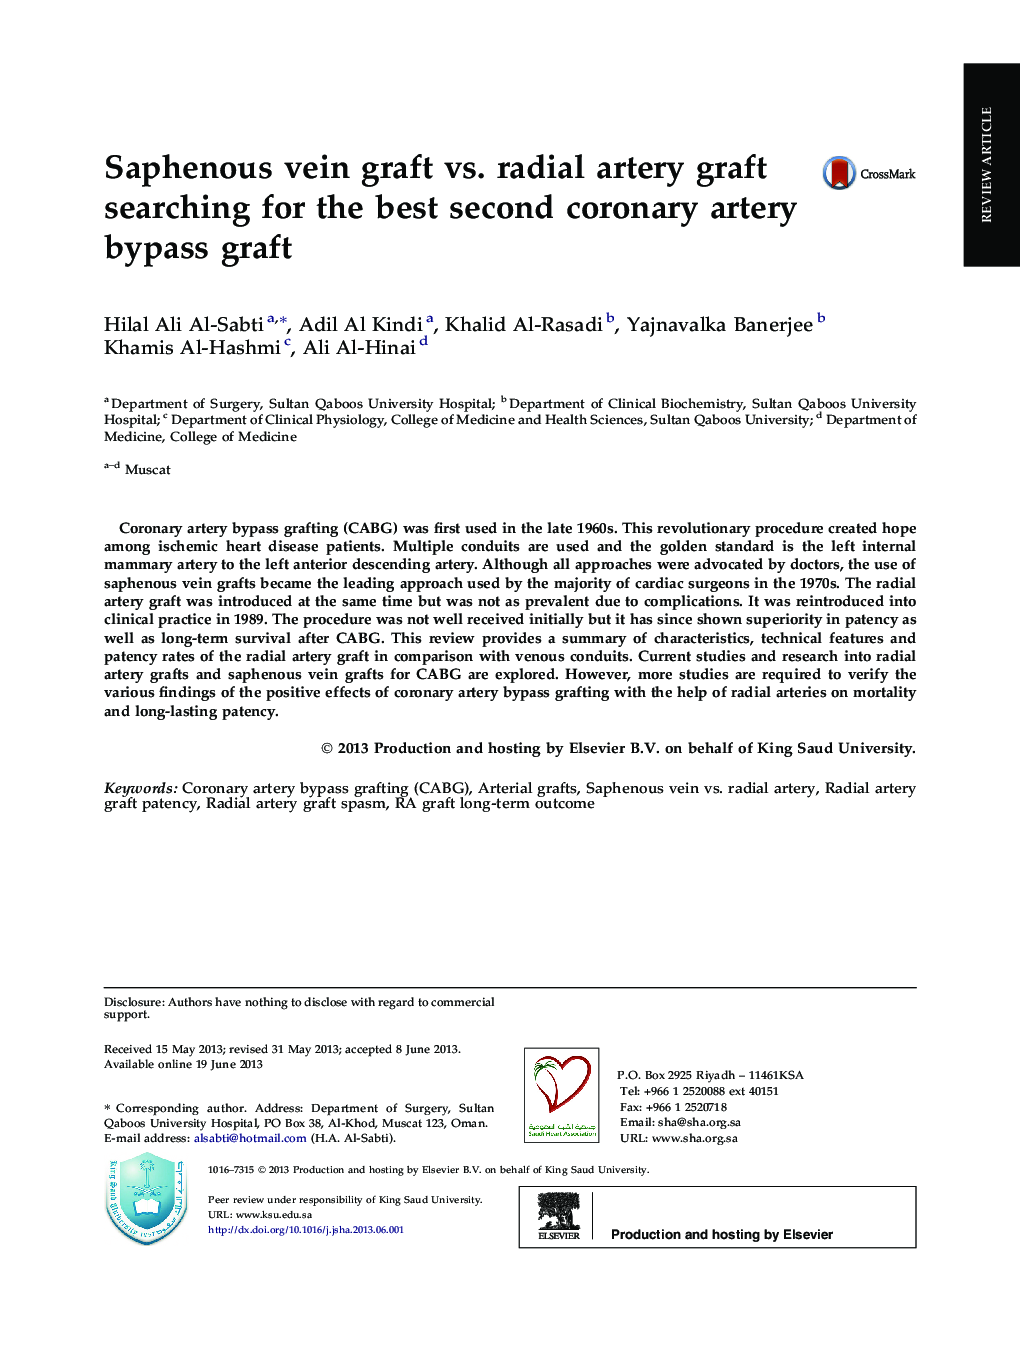 Saphenous vein graft vs. radial artery graft searching for the best second coronary artery bypass graft 